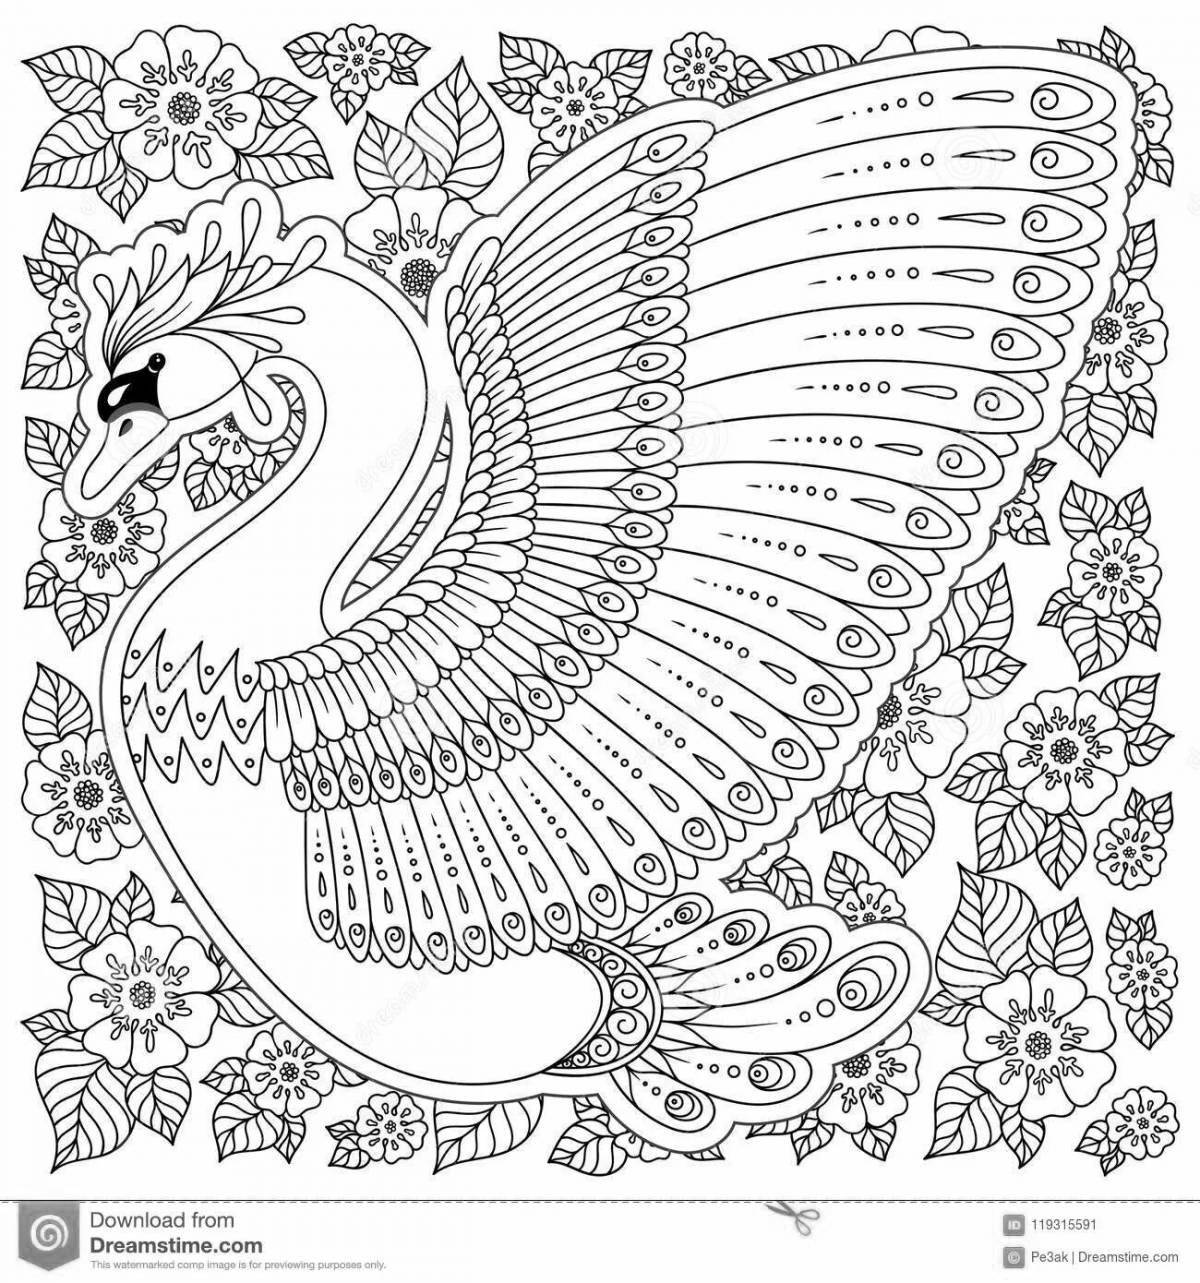 Coloring book playful antistress swan